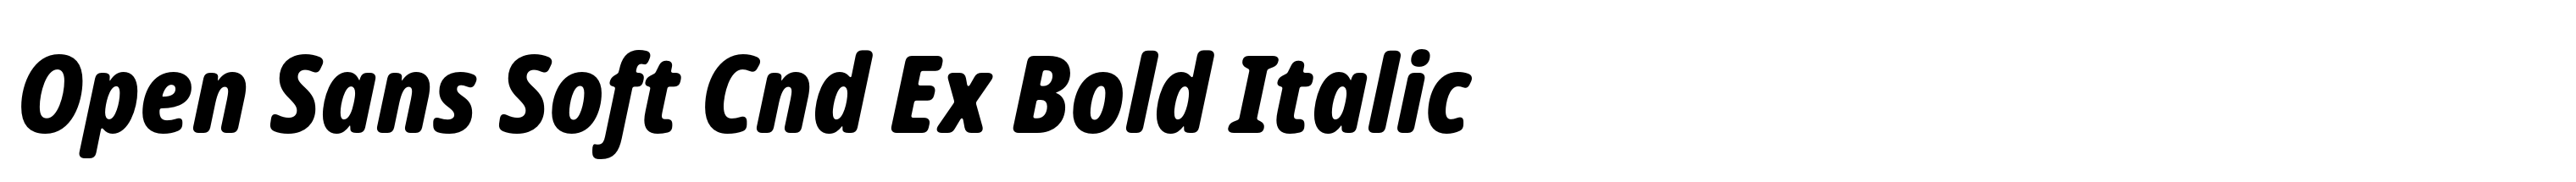 Open Sans Soft Cnd Ex Bold Italic